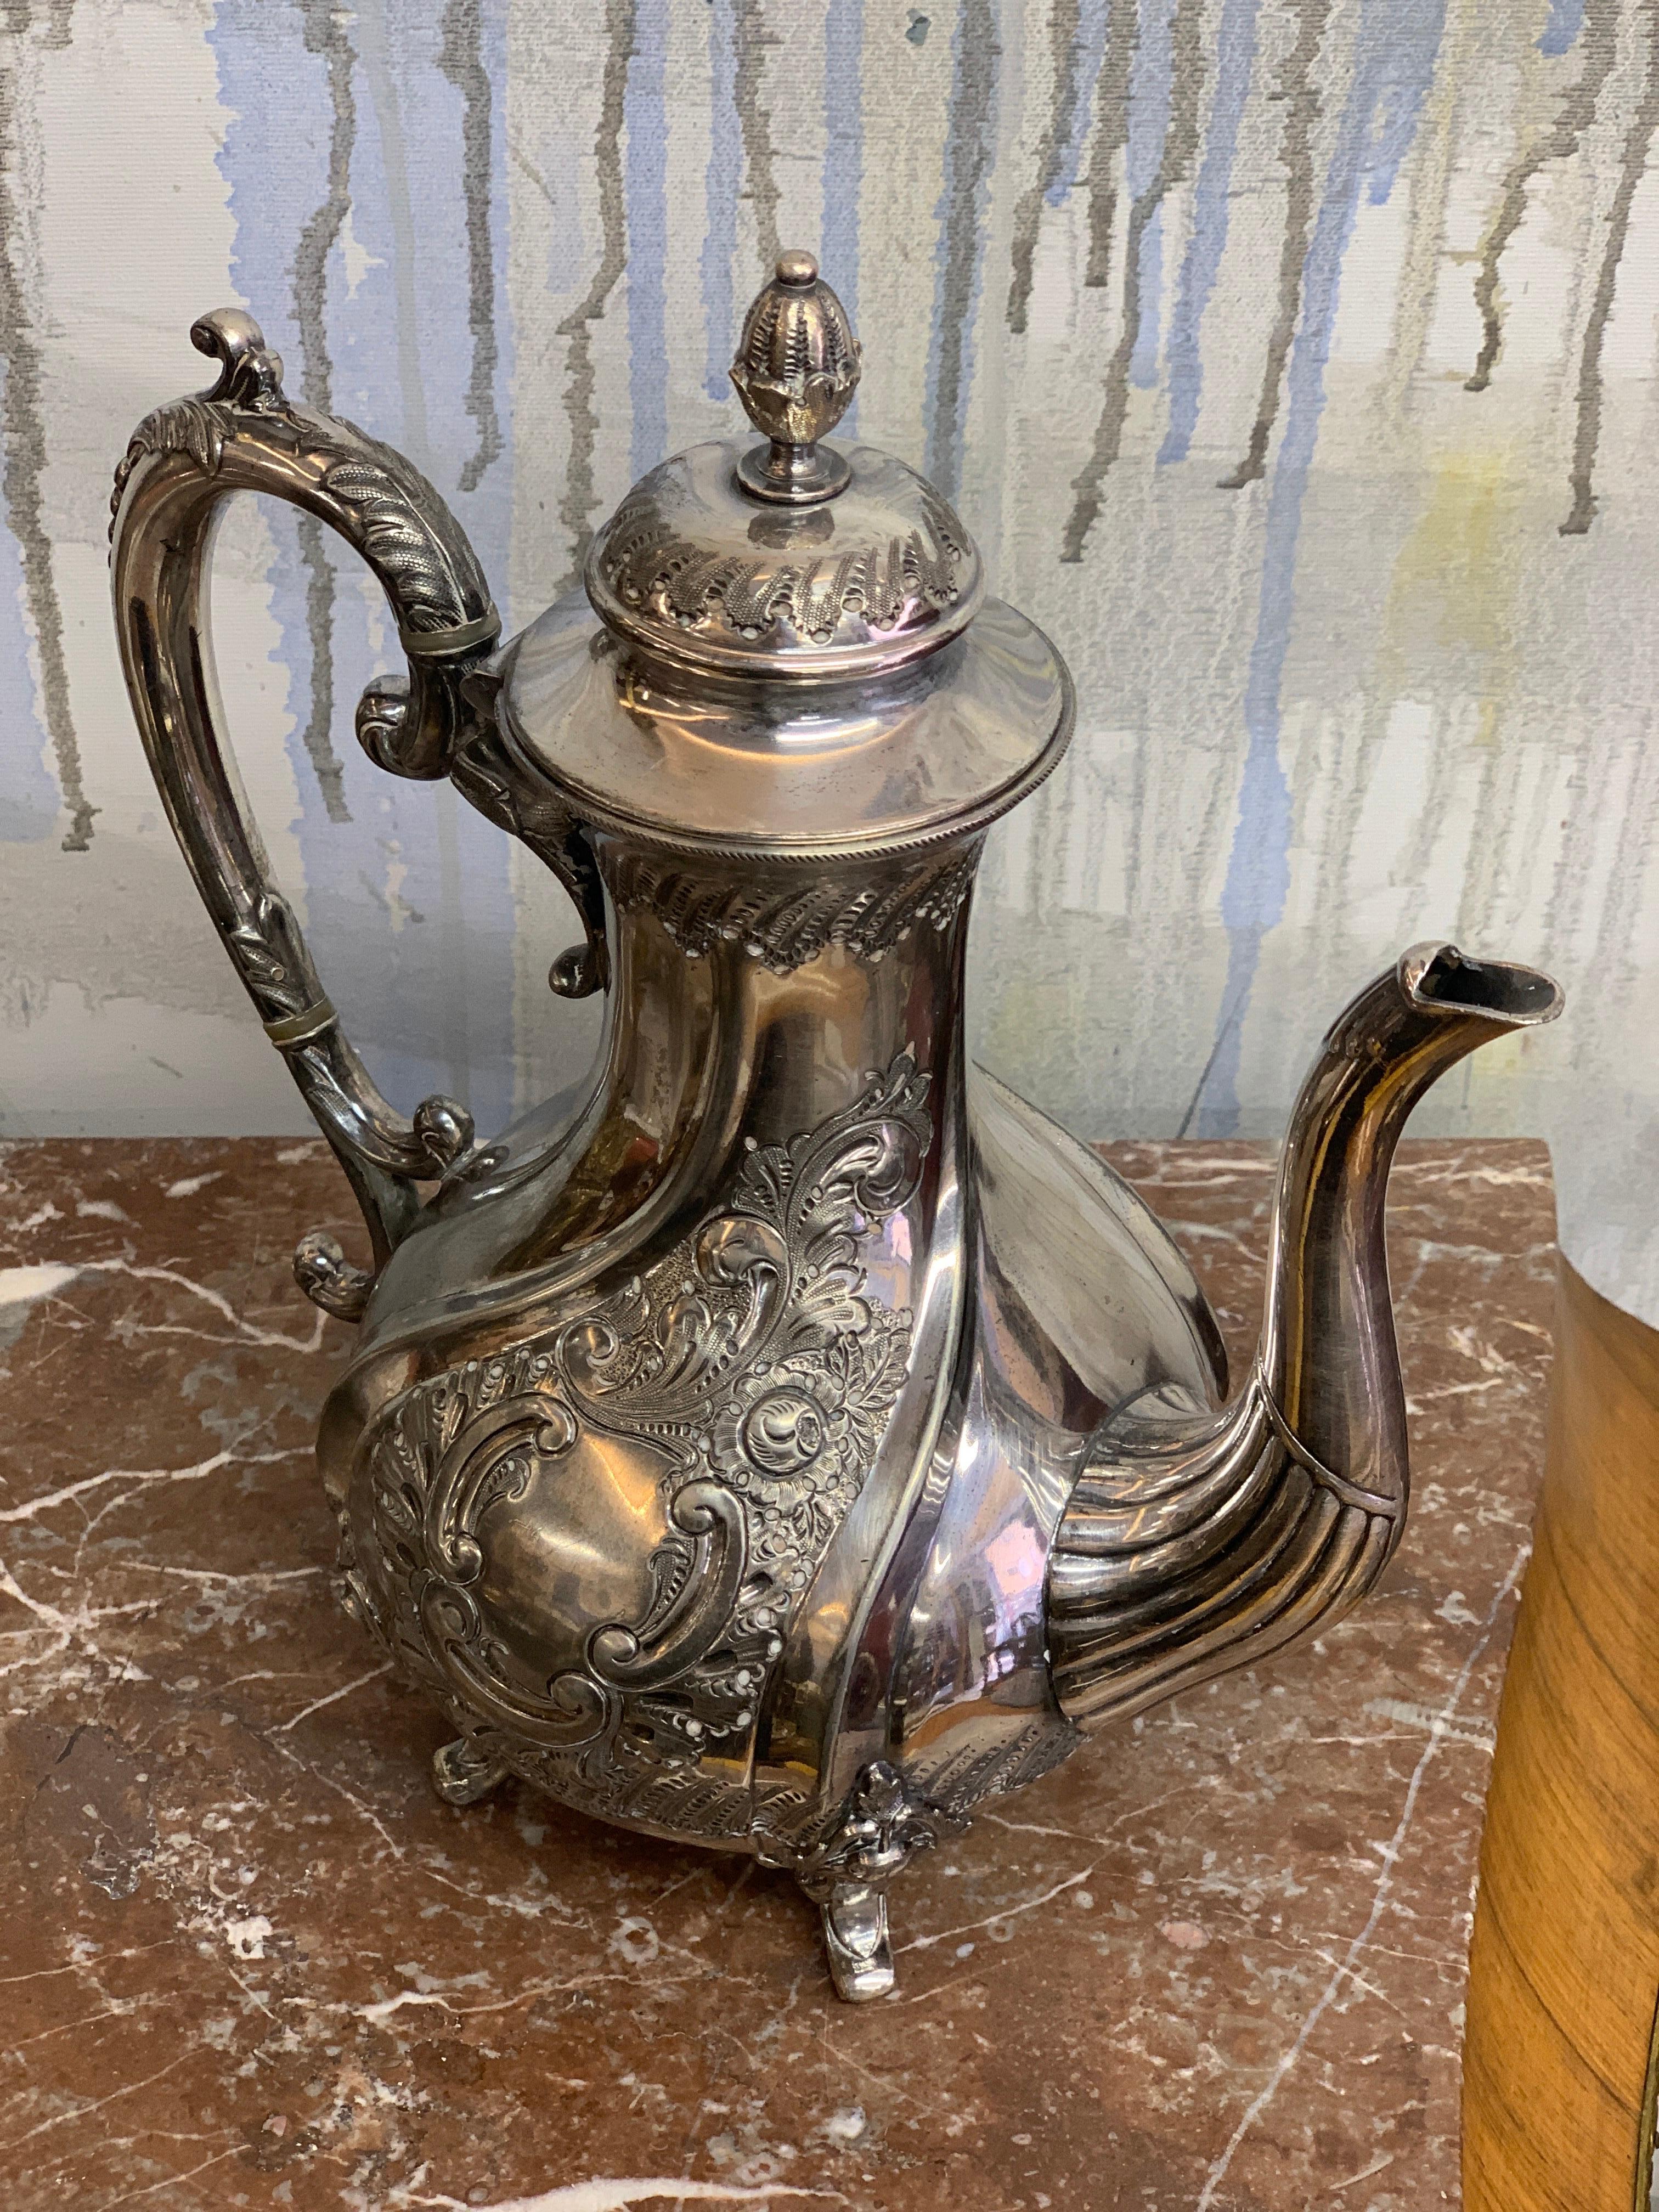 silver on copper tea set